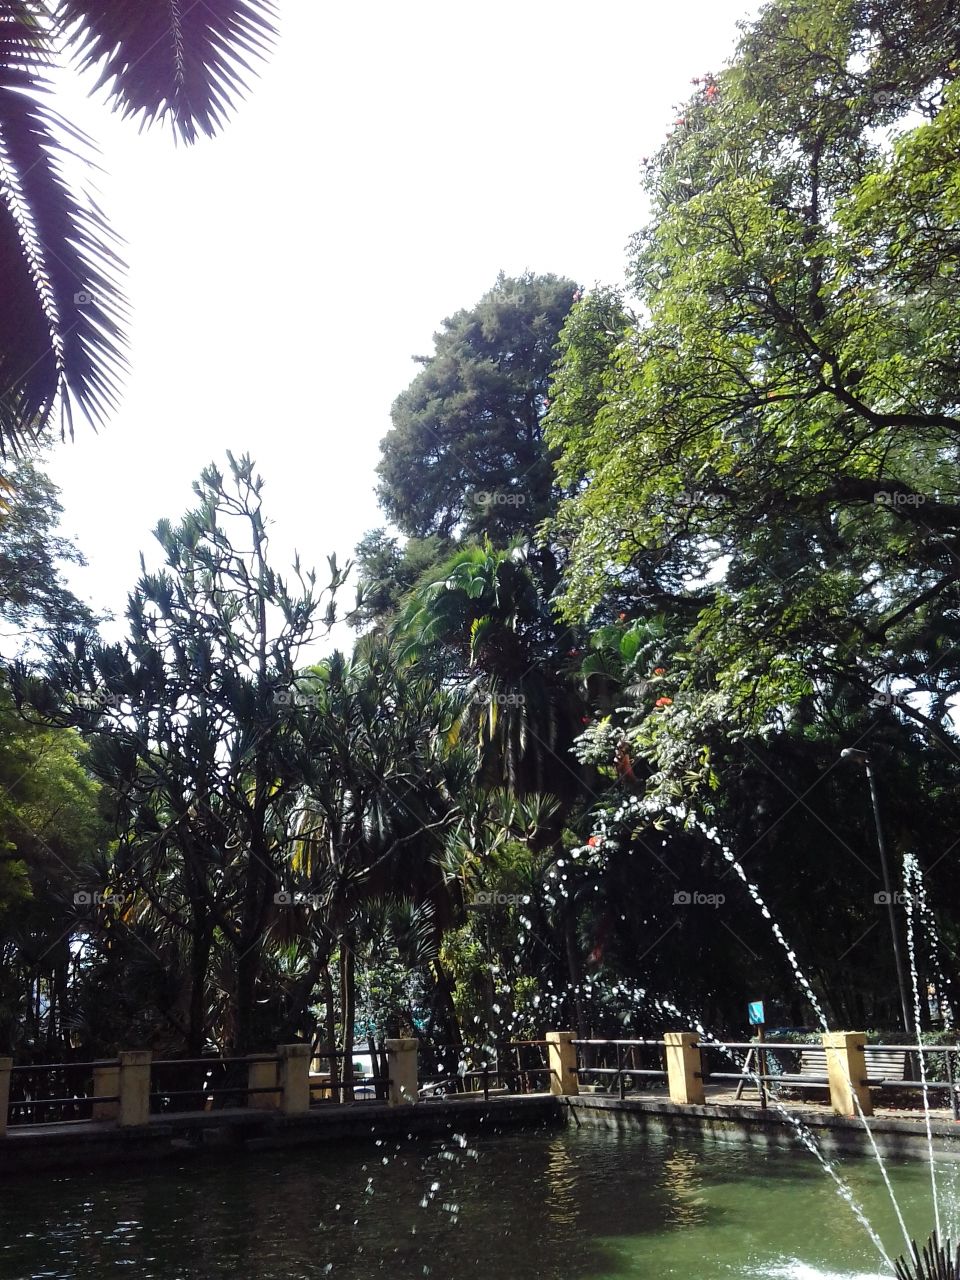 Fountain + Trees - Água Branca Park - São Paulo, Brasil